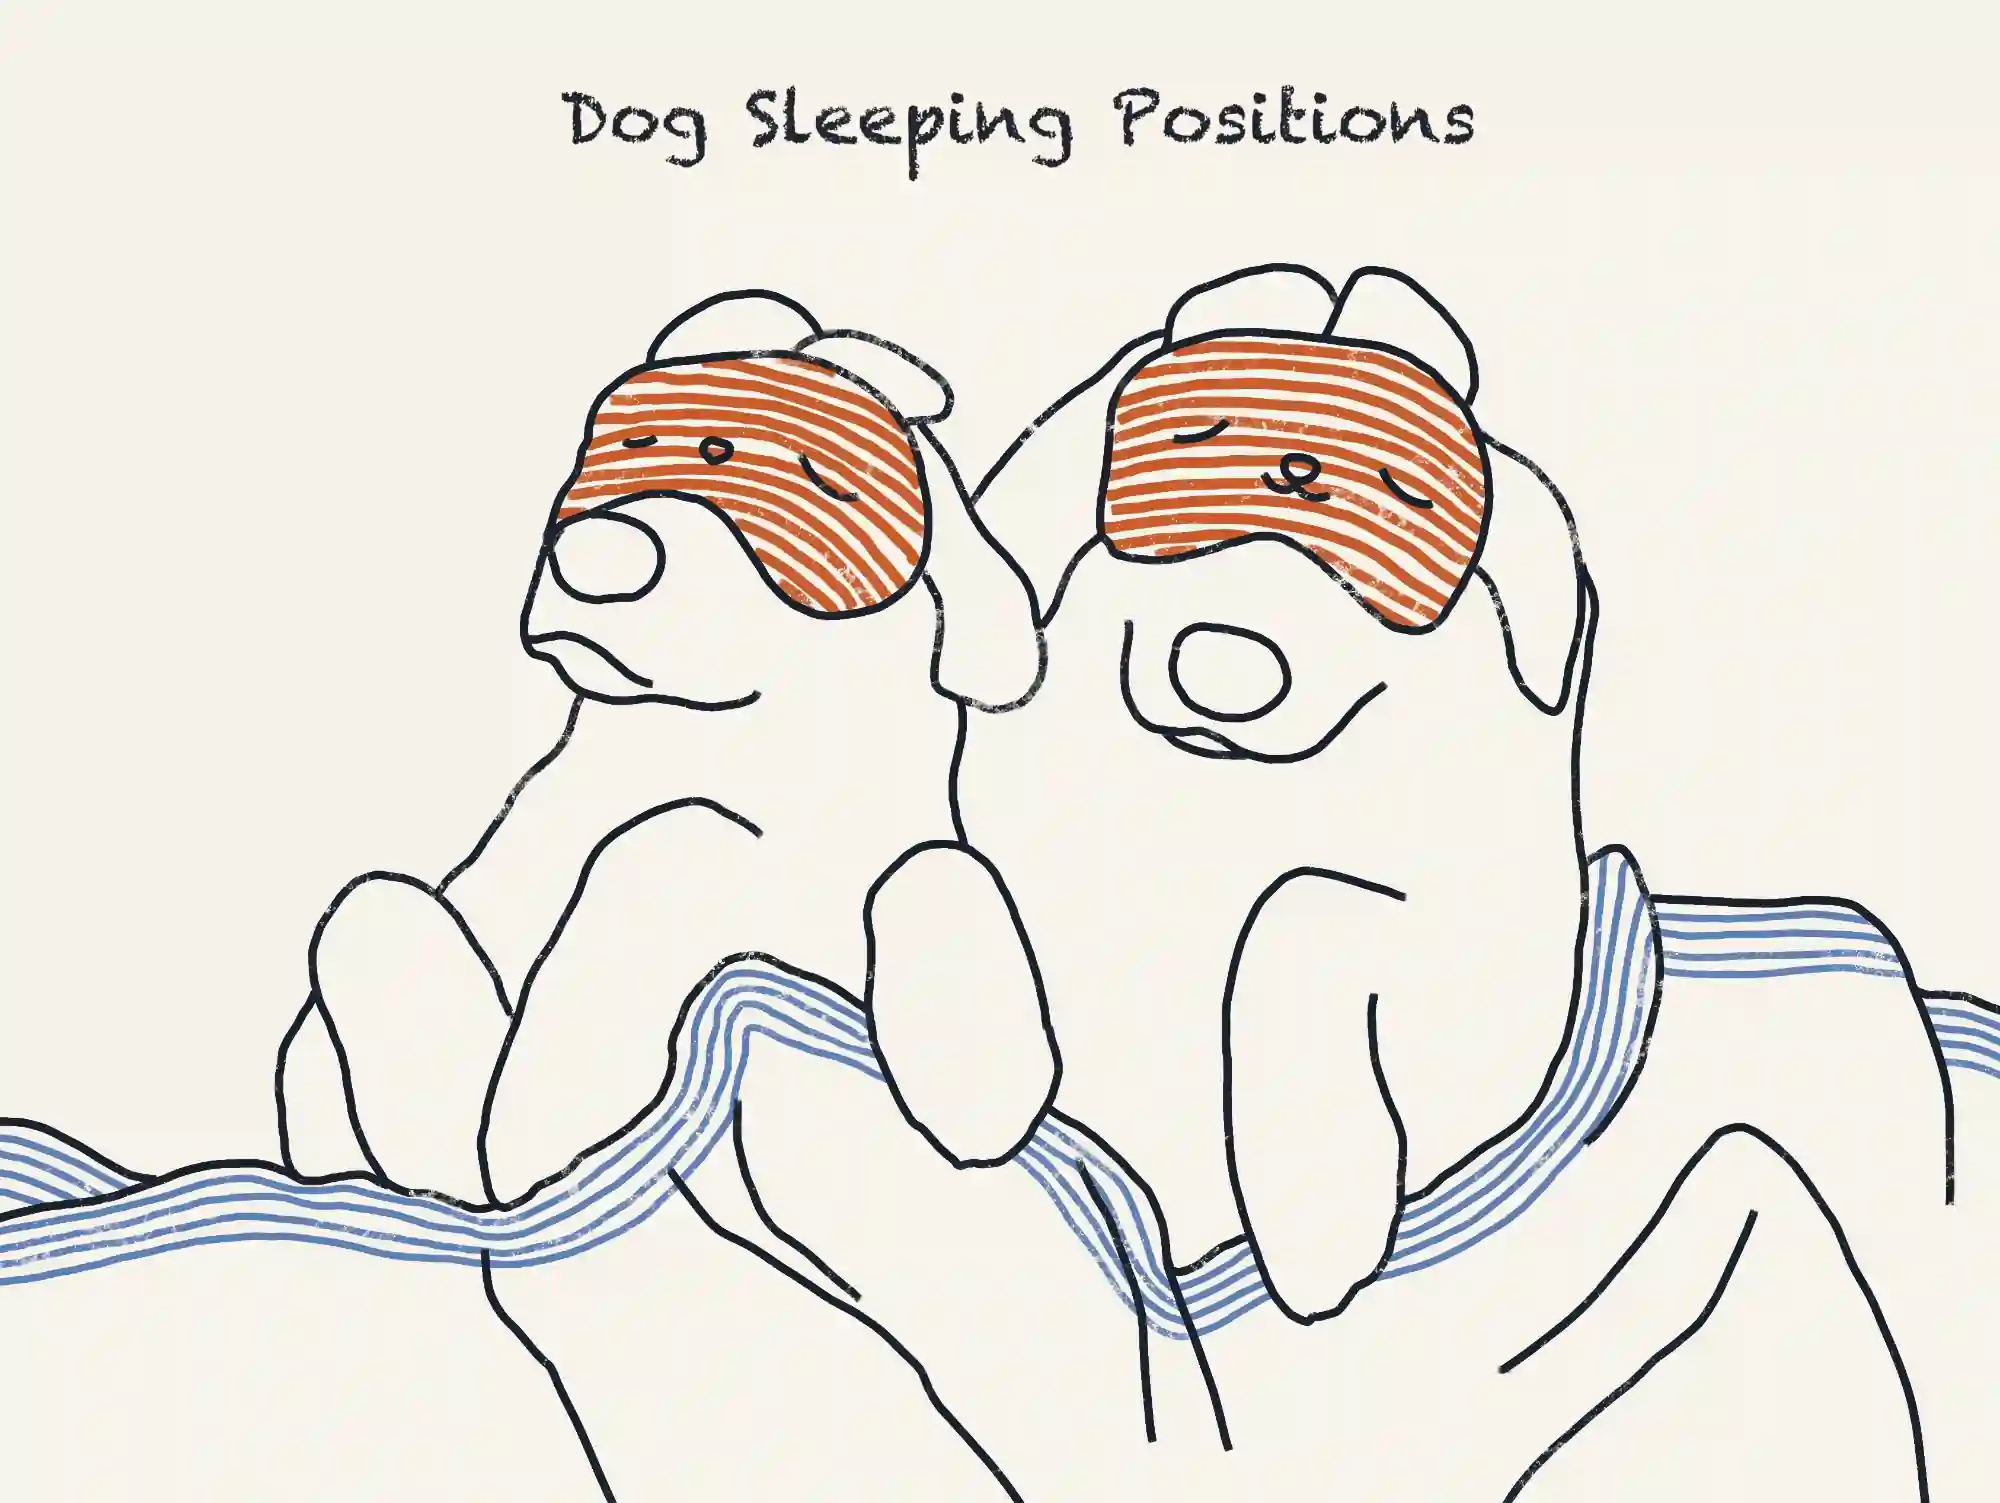 Illustration of Dog Sleeping Positions